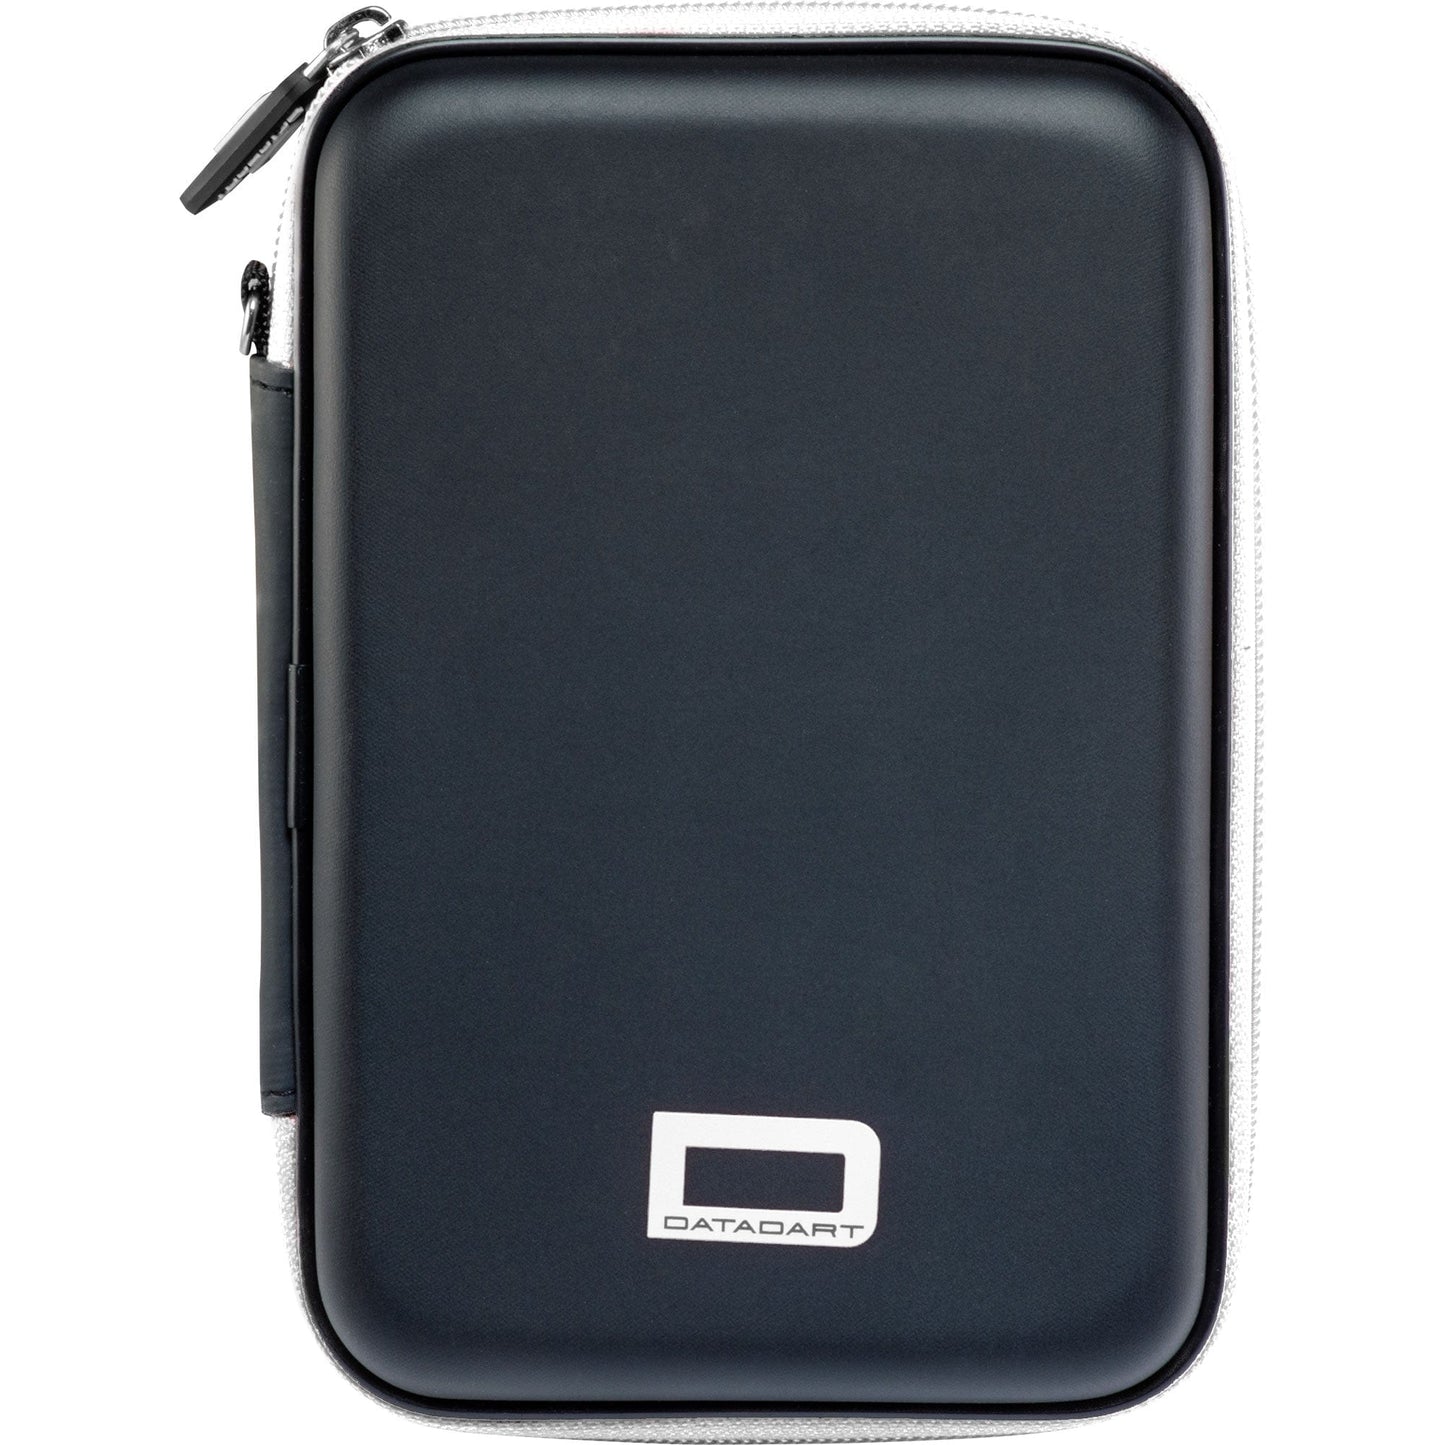 Datadart ProPac MAX Darts Case - Large EVA Case - Holds 2 Fully Assembled Sets White